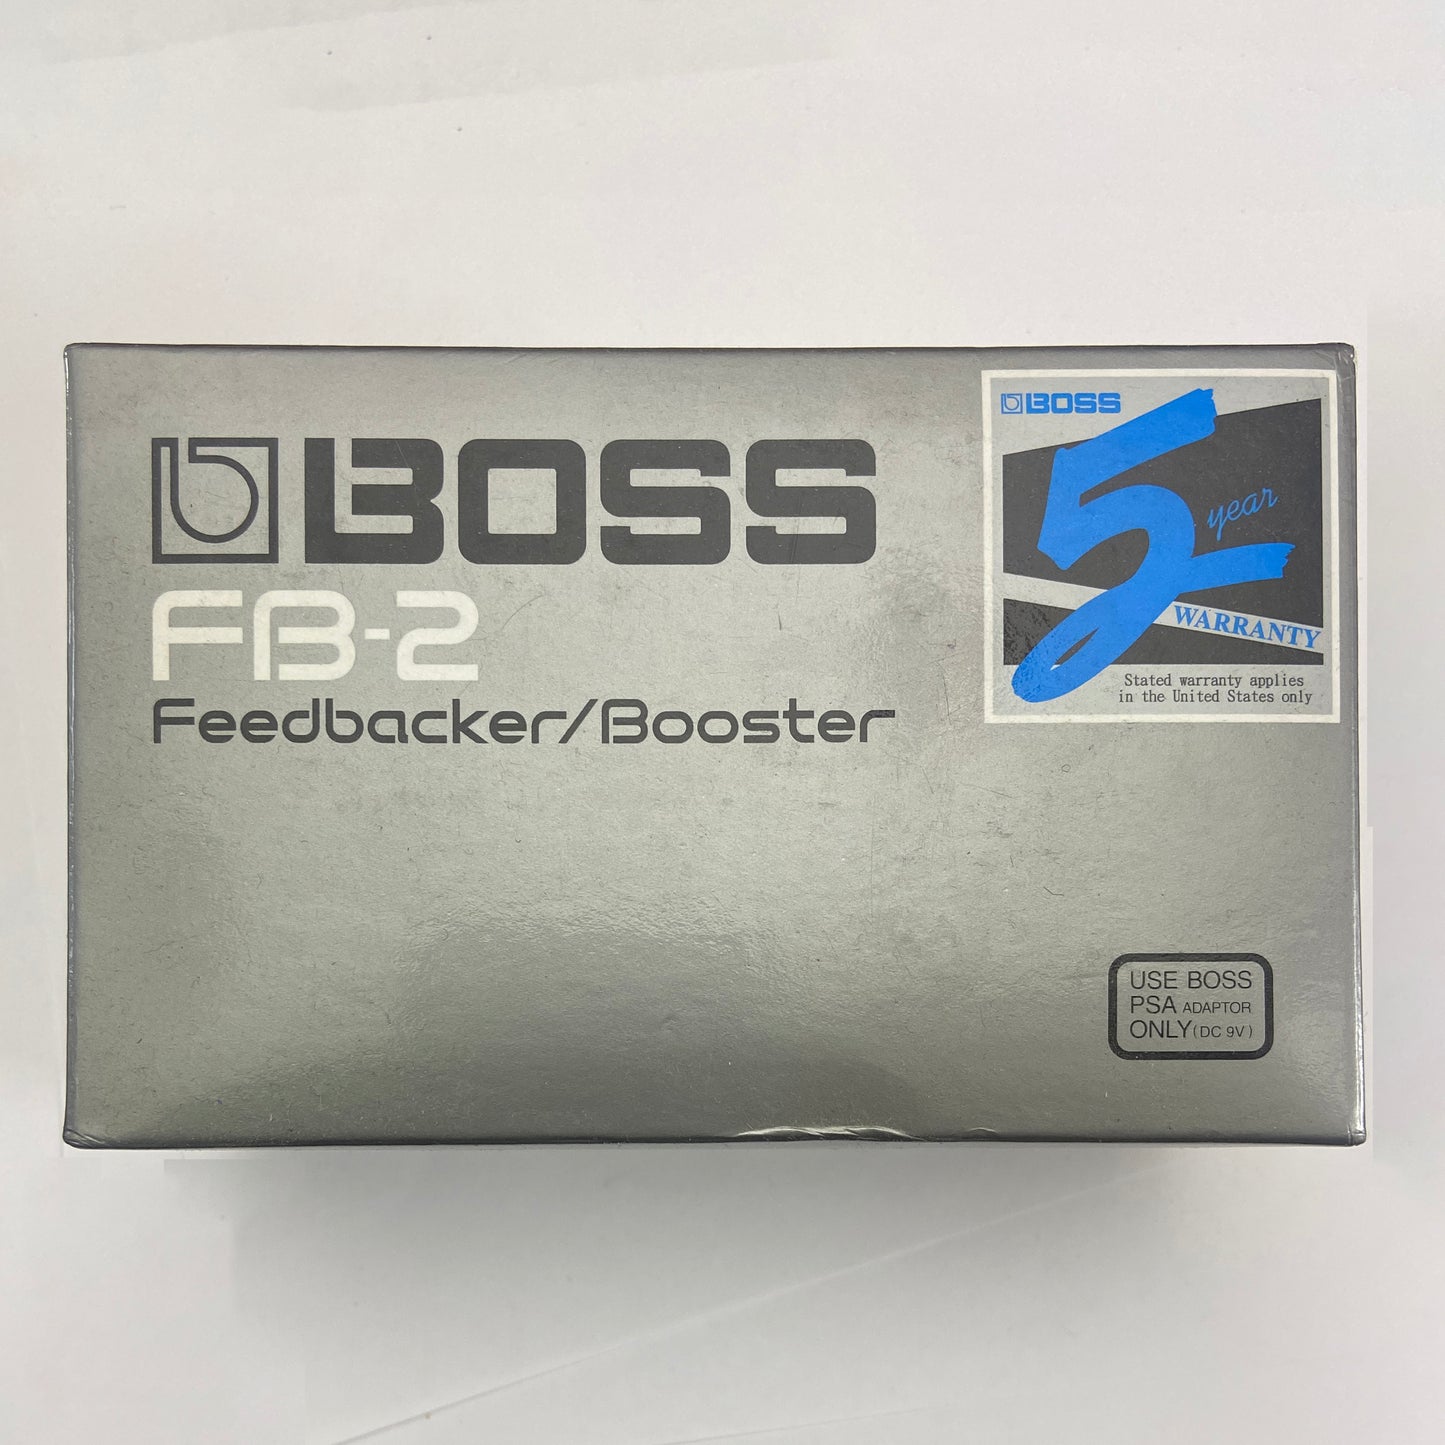 BOSS FB-2 Feedbacker/Booster (B-STOCK)